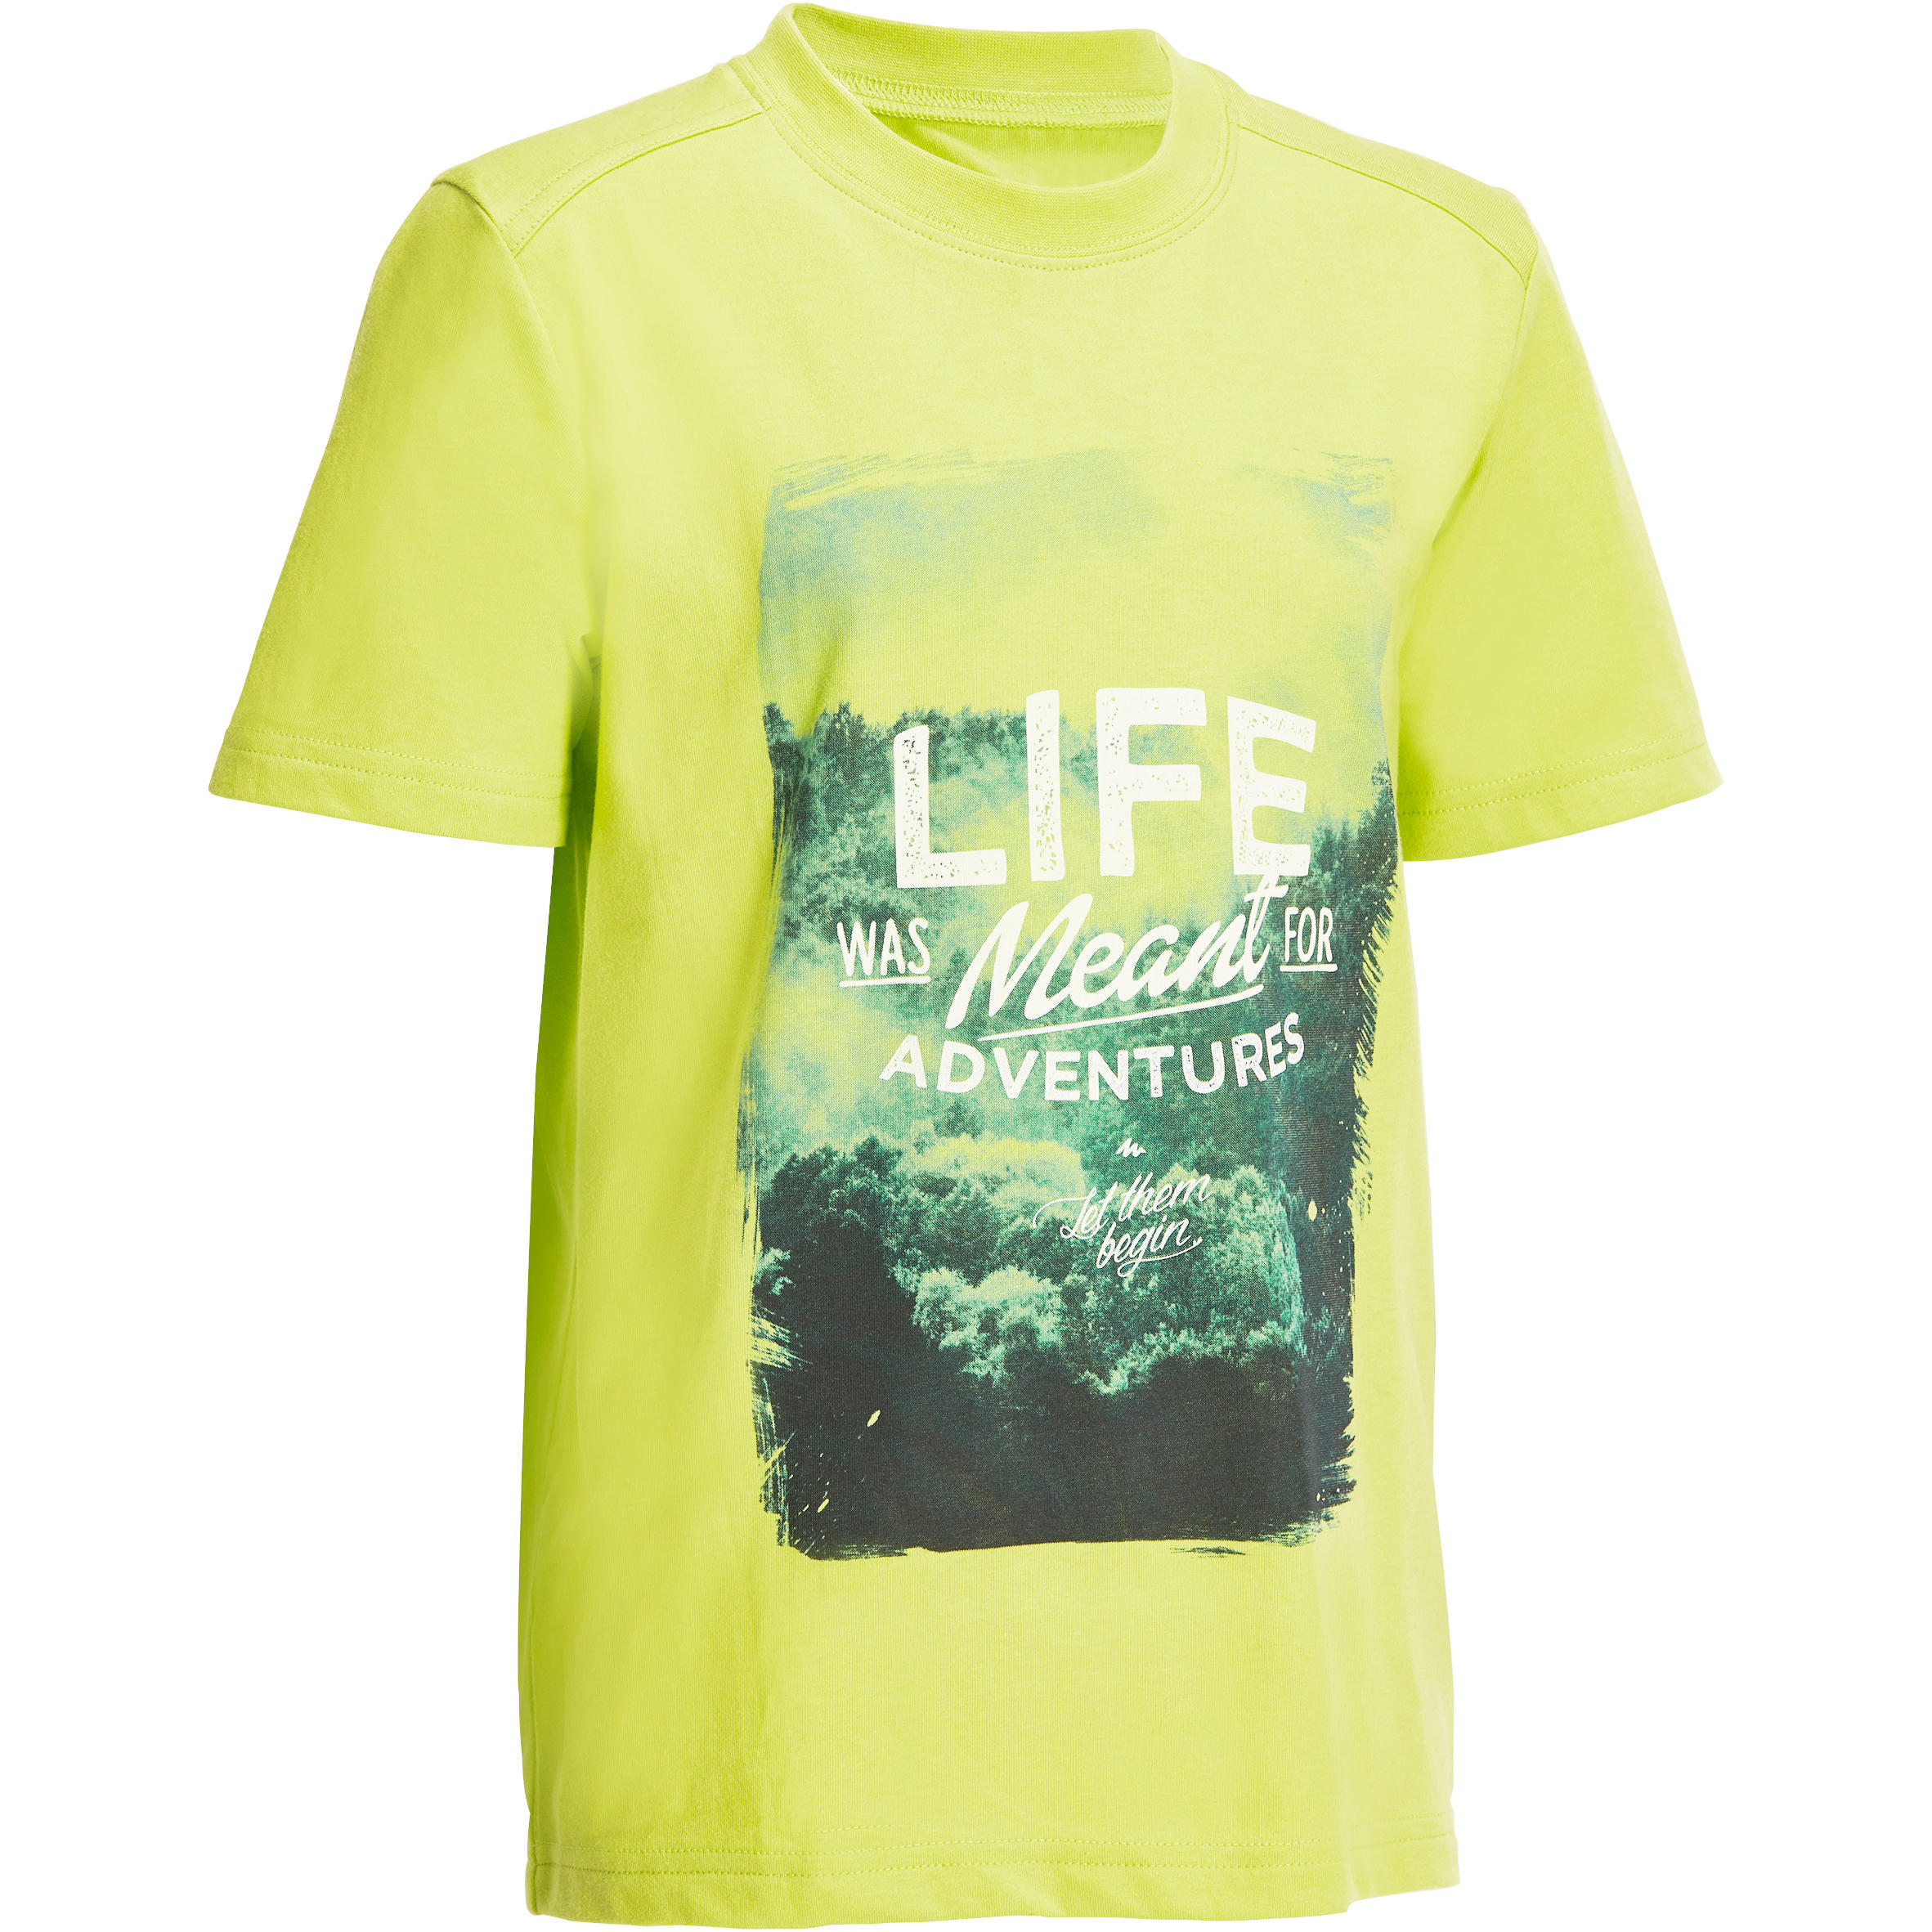 QUECHUA Hike 500 Children’s Hiking T-shirt - Green